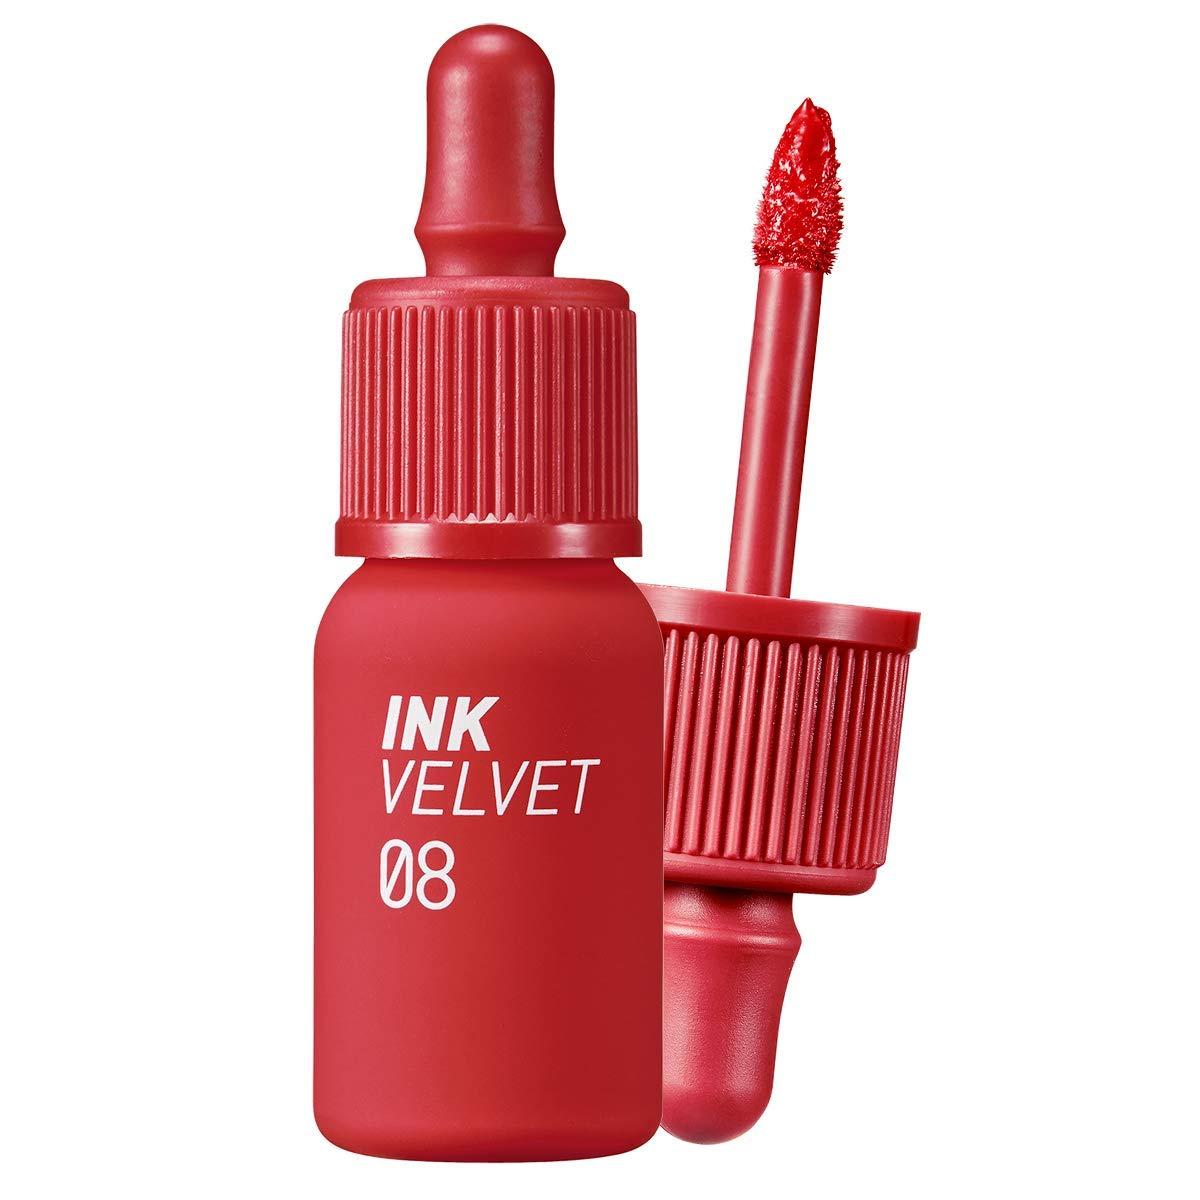 Peripera Ink Velvet Lip Tint #08 SELLOUT RED